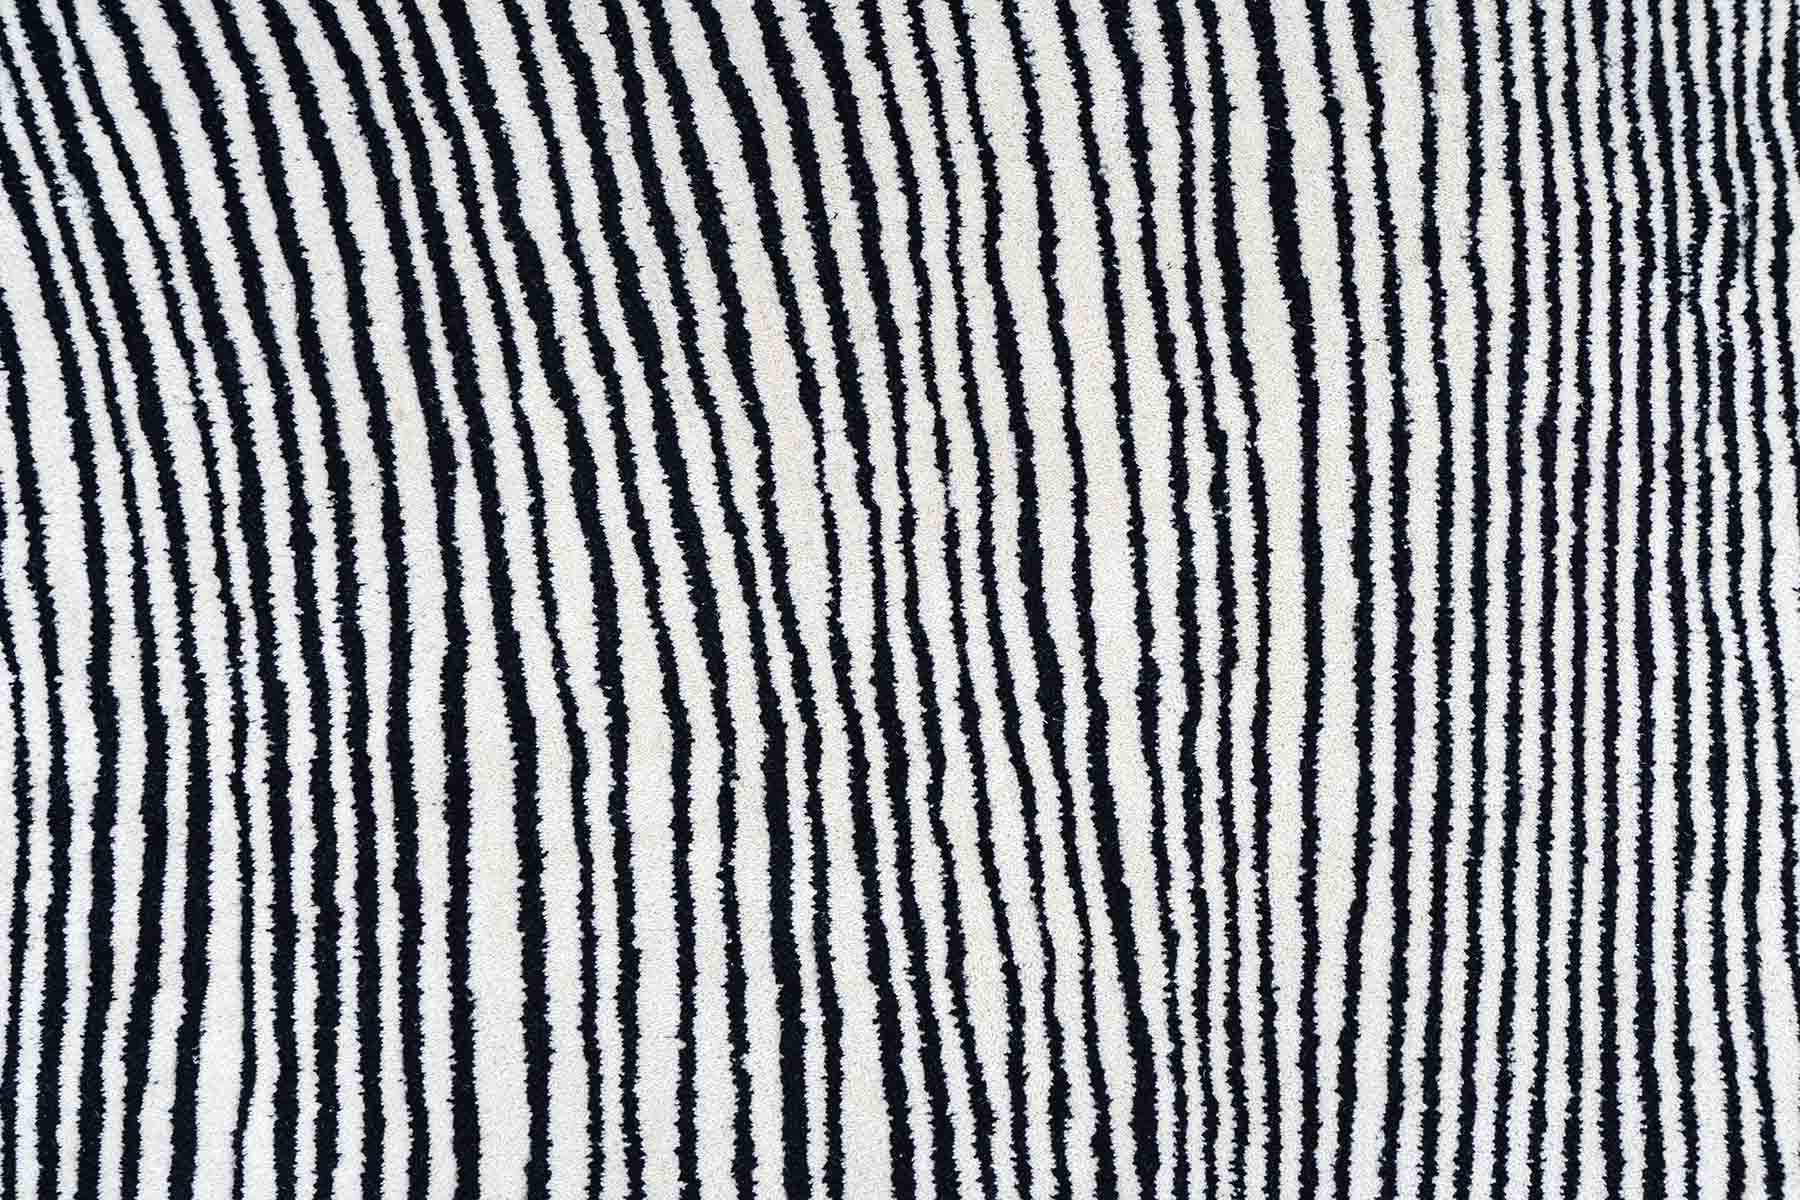 Monochrome Wool Rug